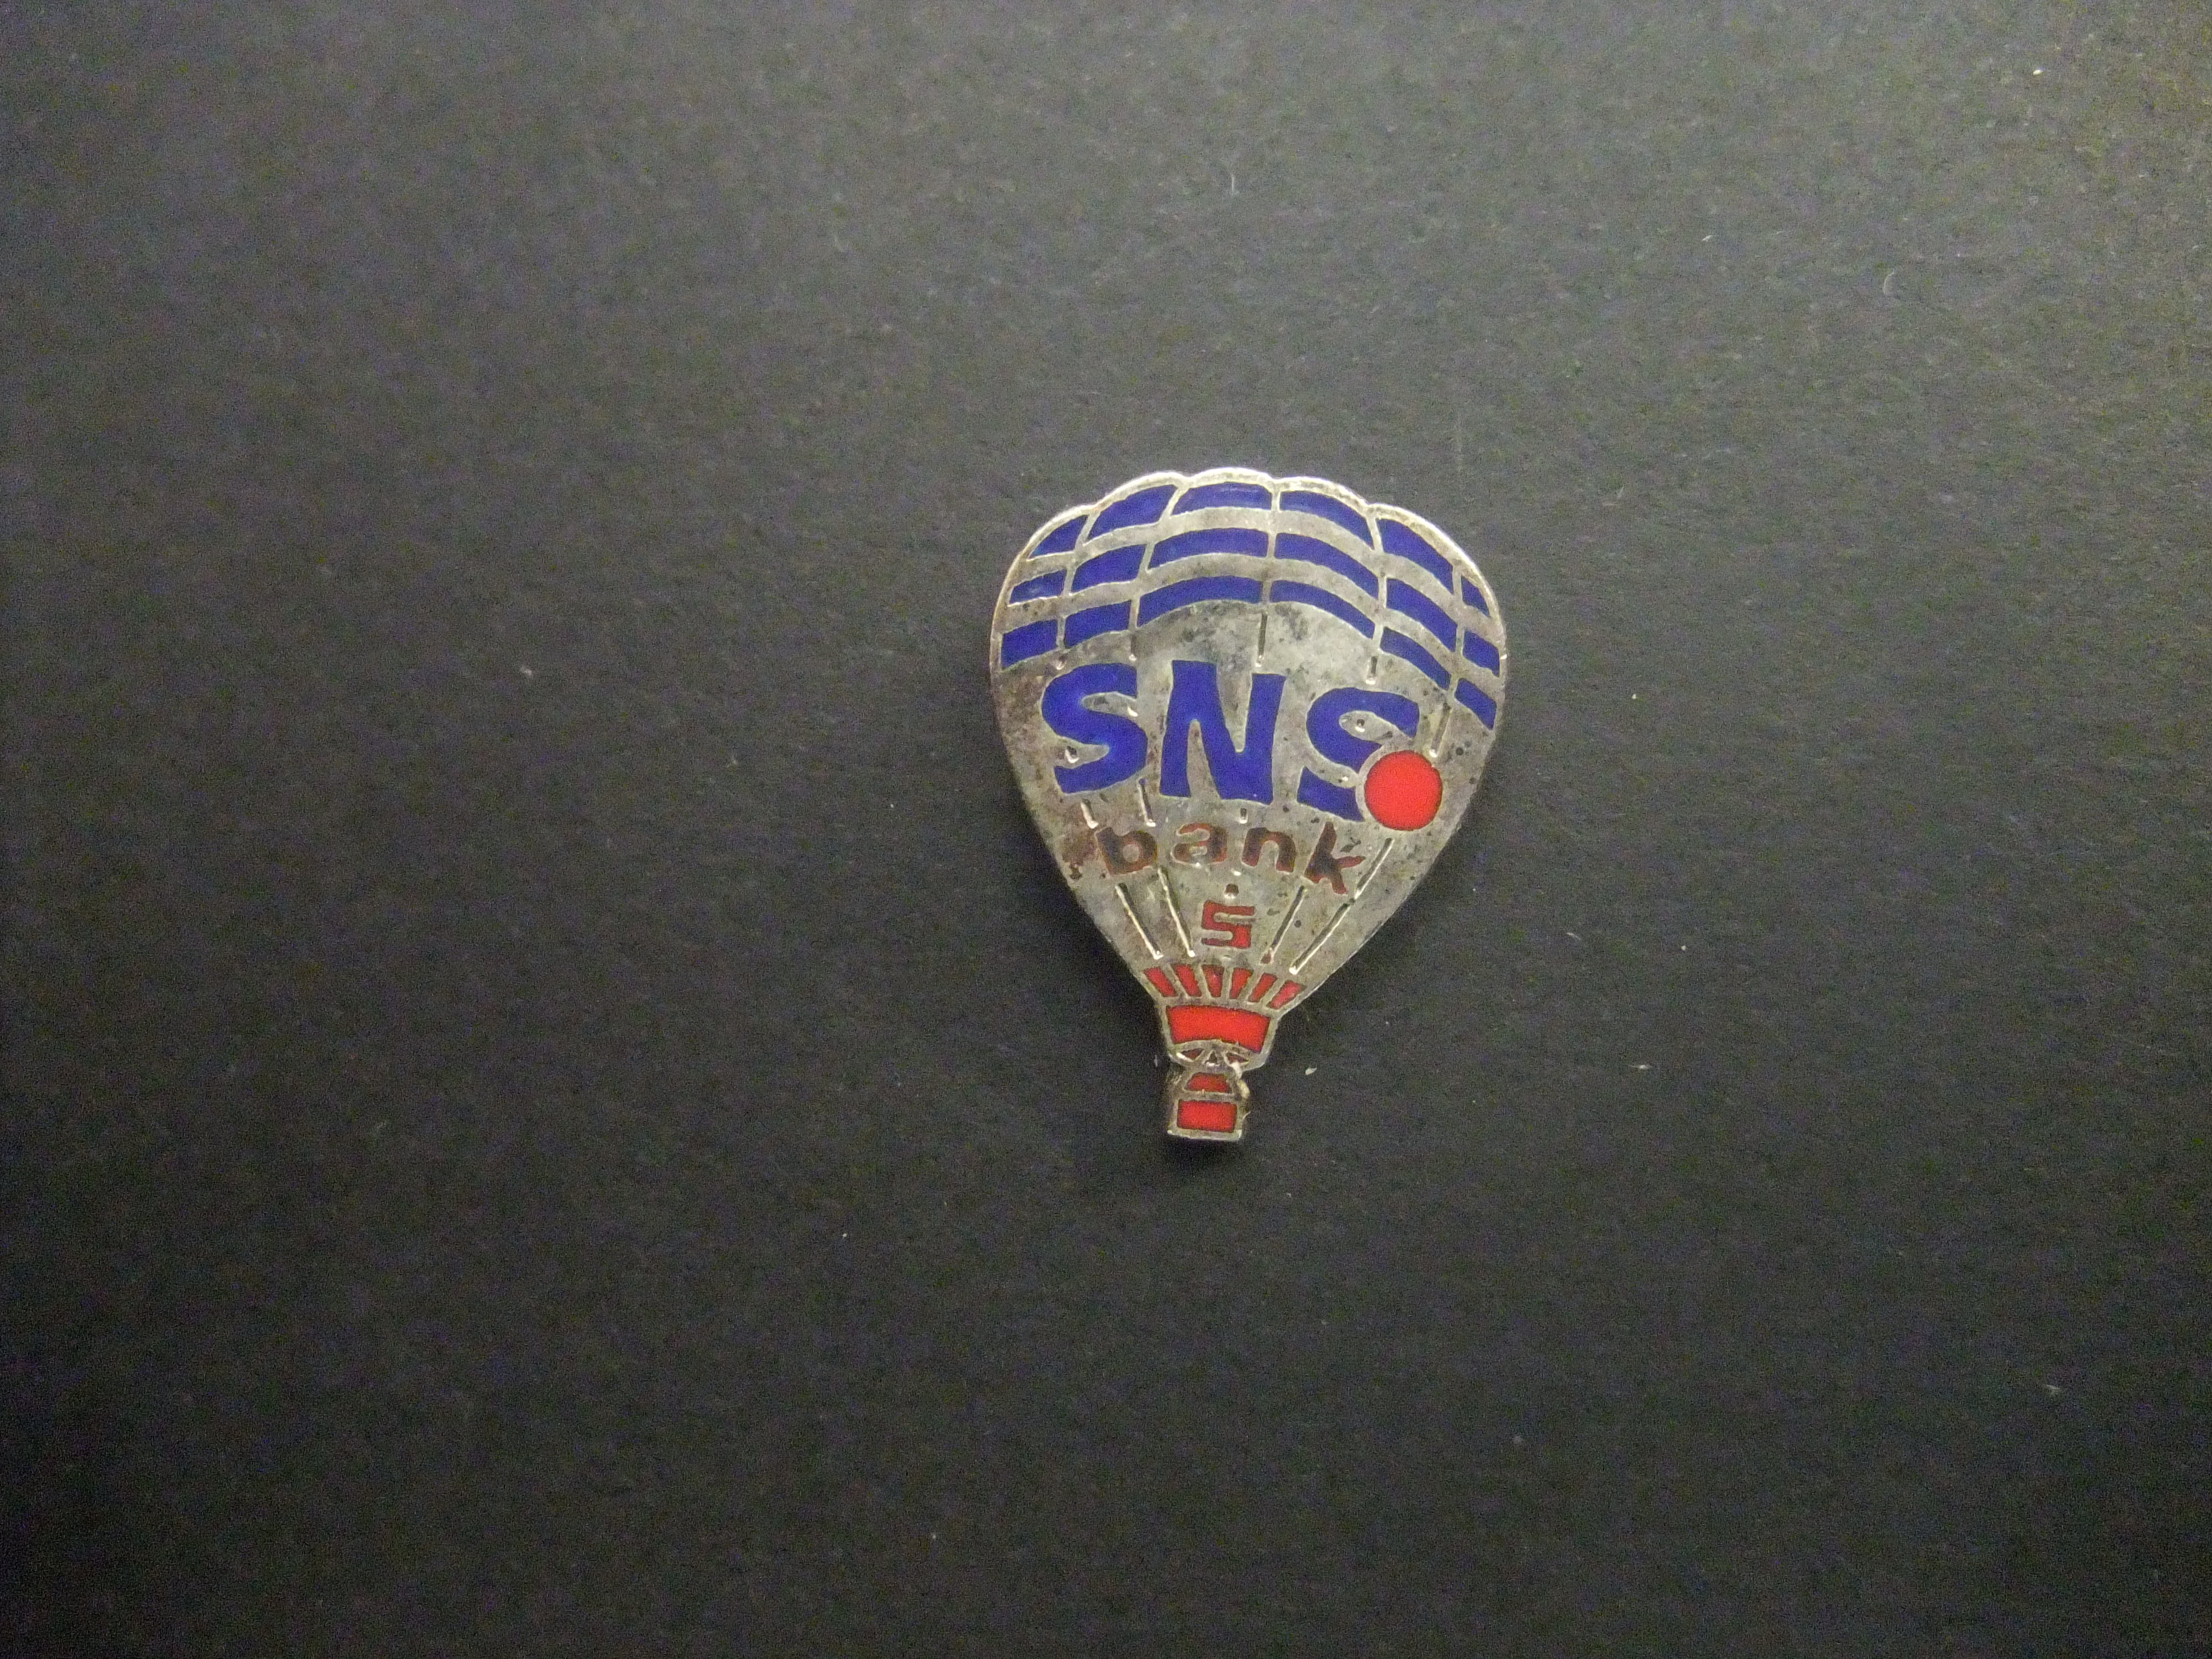 SNS bank Nederlandse bankholding luchtballon